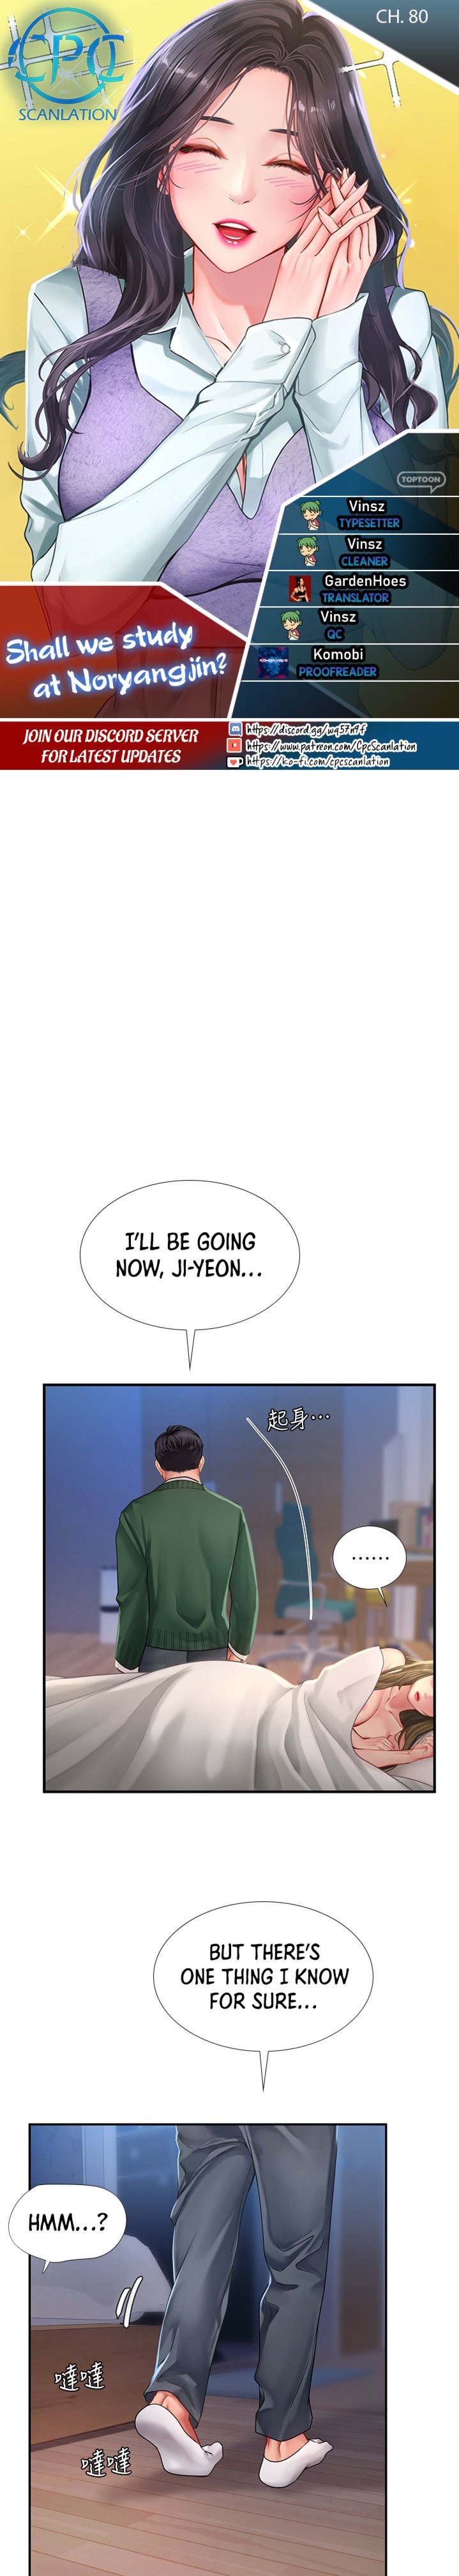 Should I Study at Noryangjin? - Chapter 80 Page 1